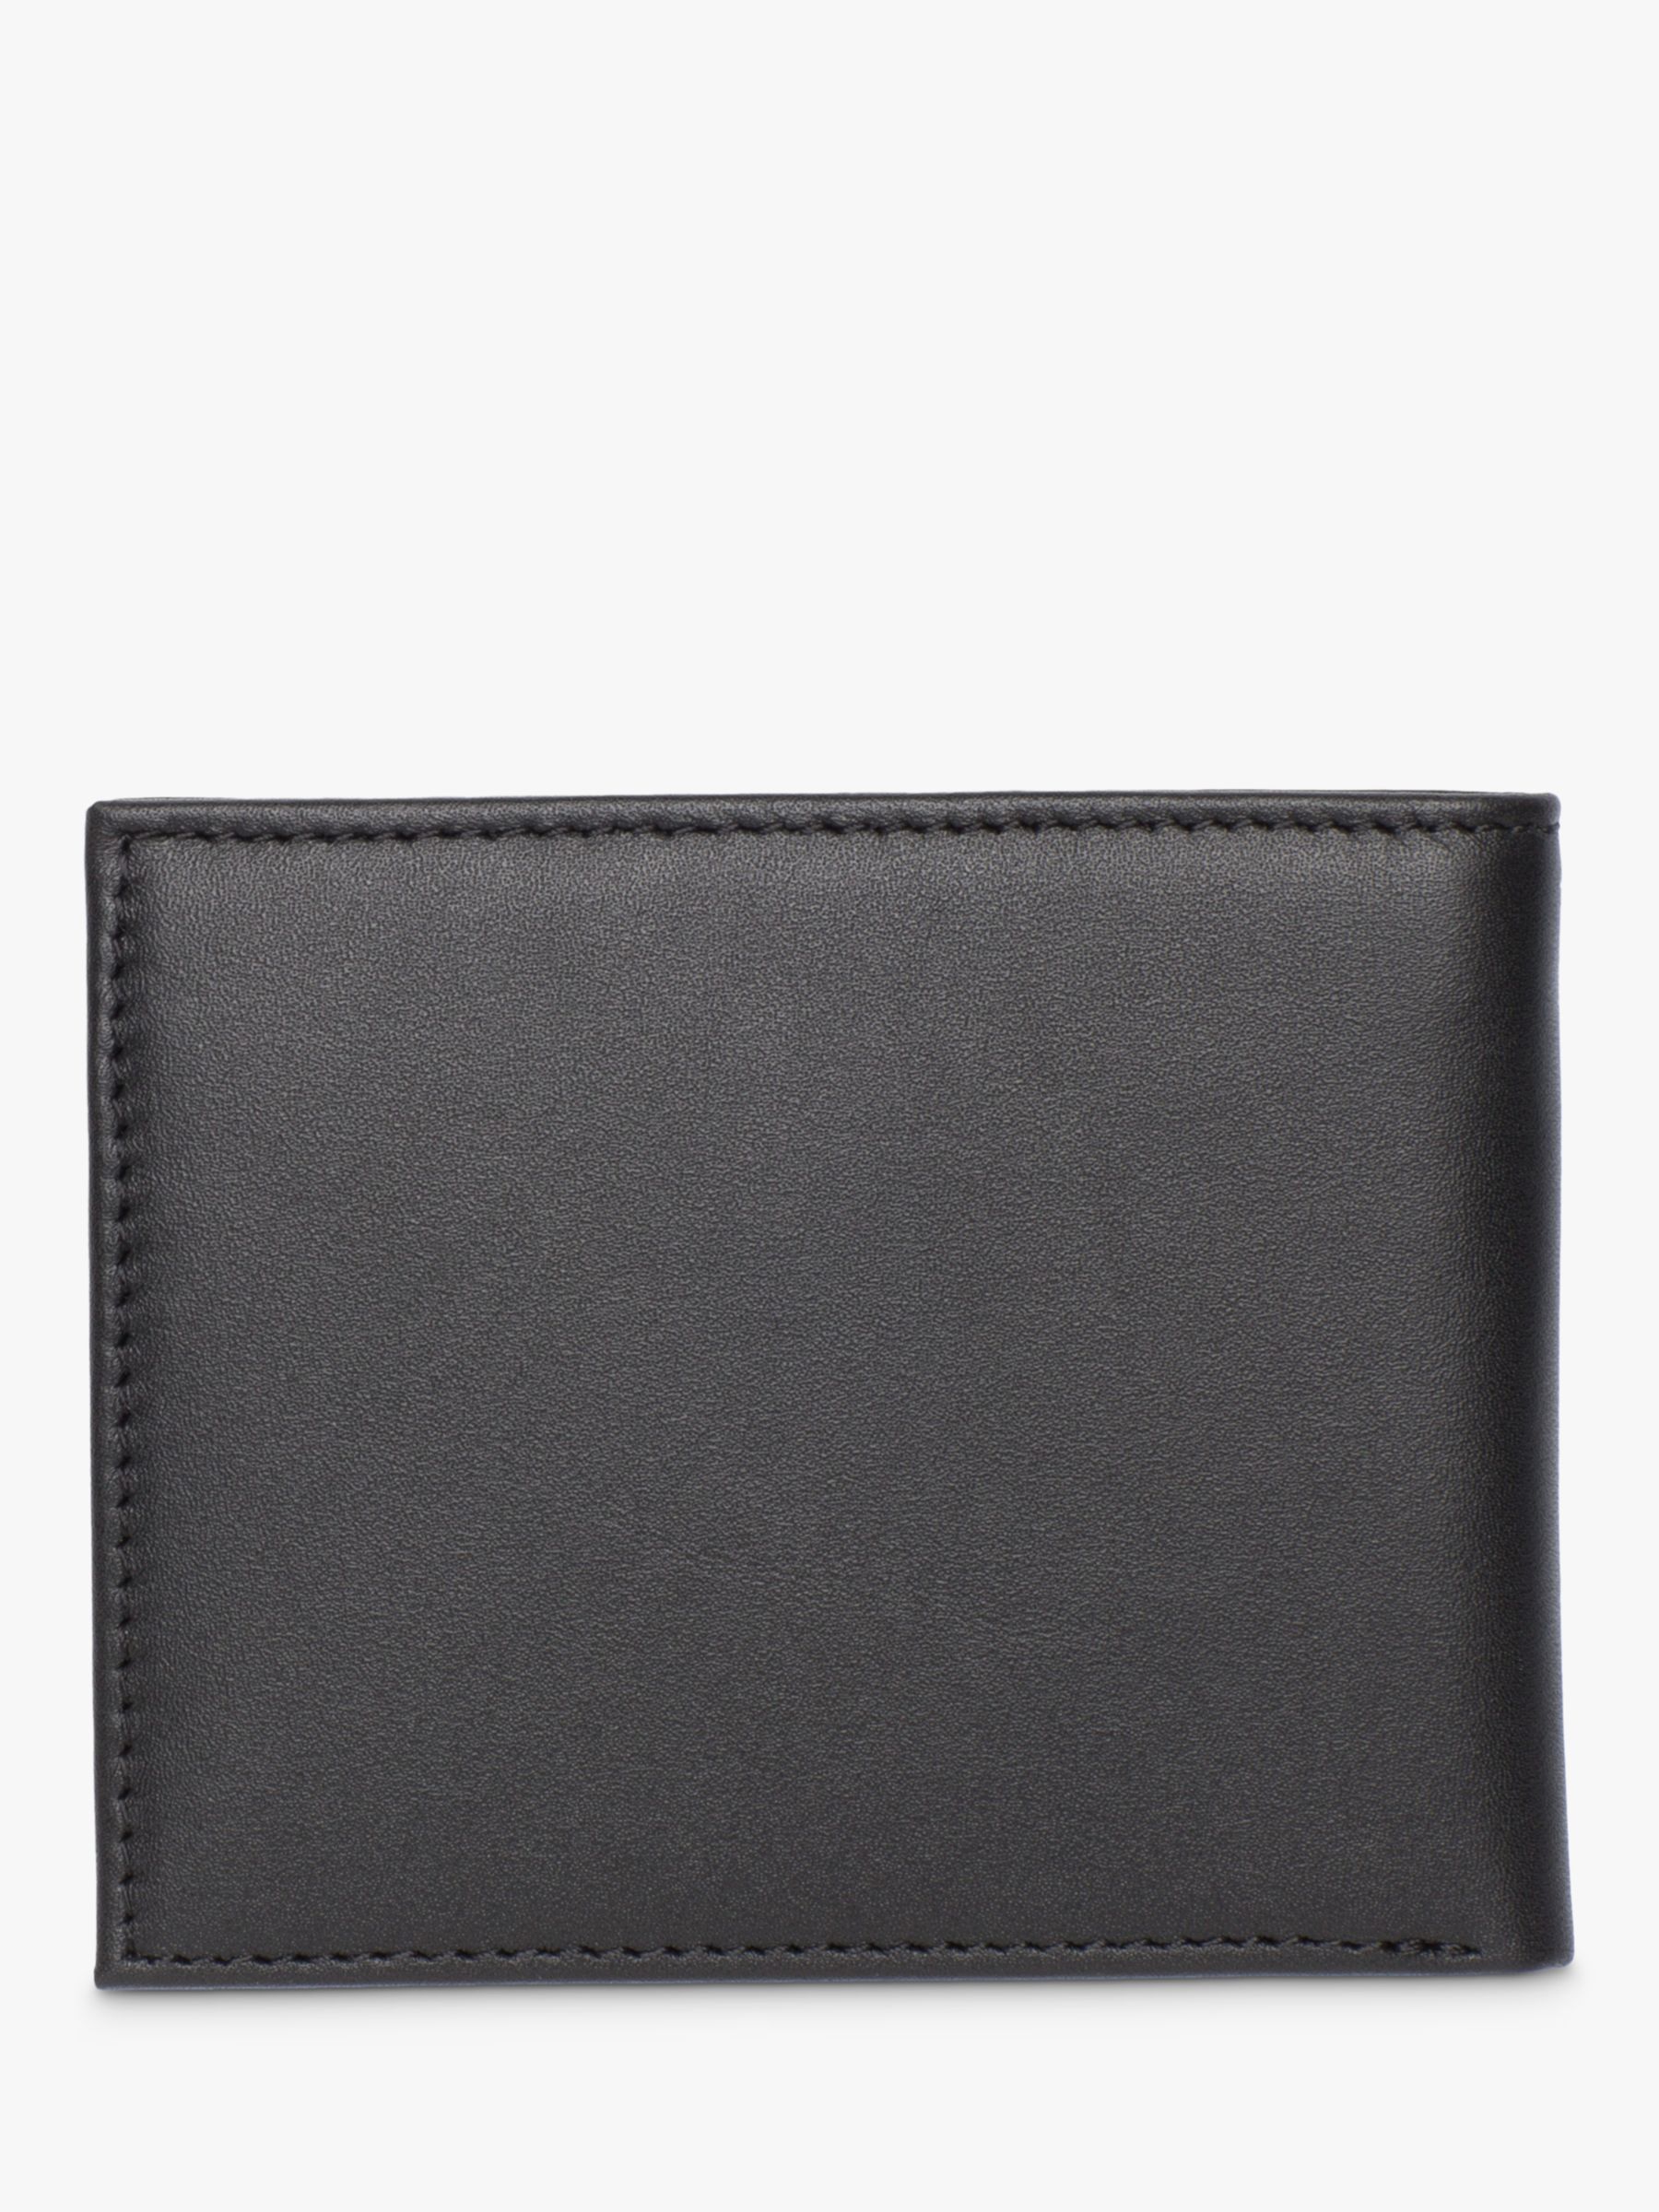 Tommy Hilfiger Eton Leather Mini Wallet, Black at John Lewis & Partners